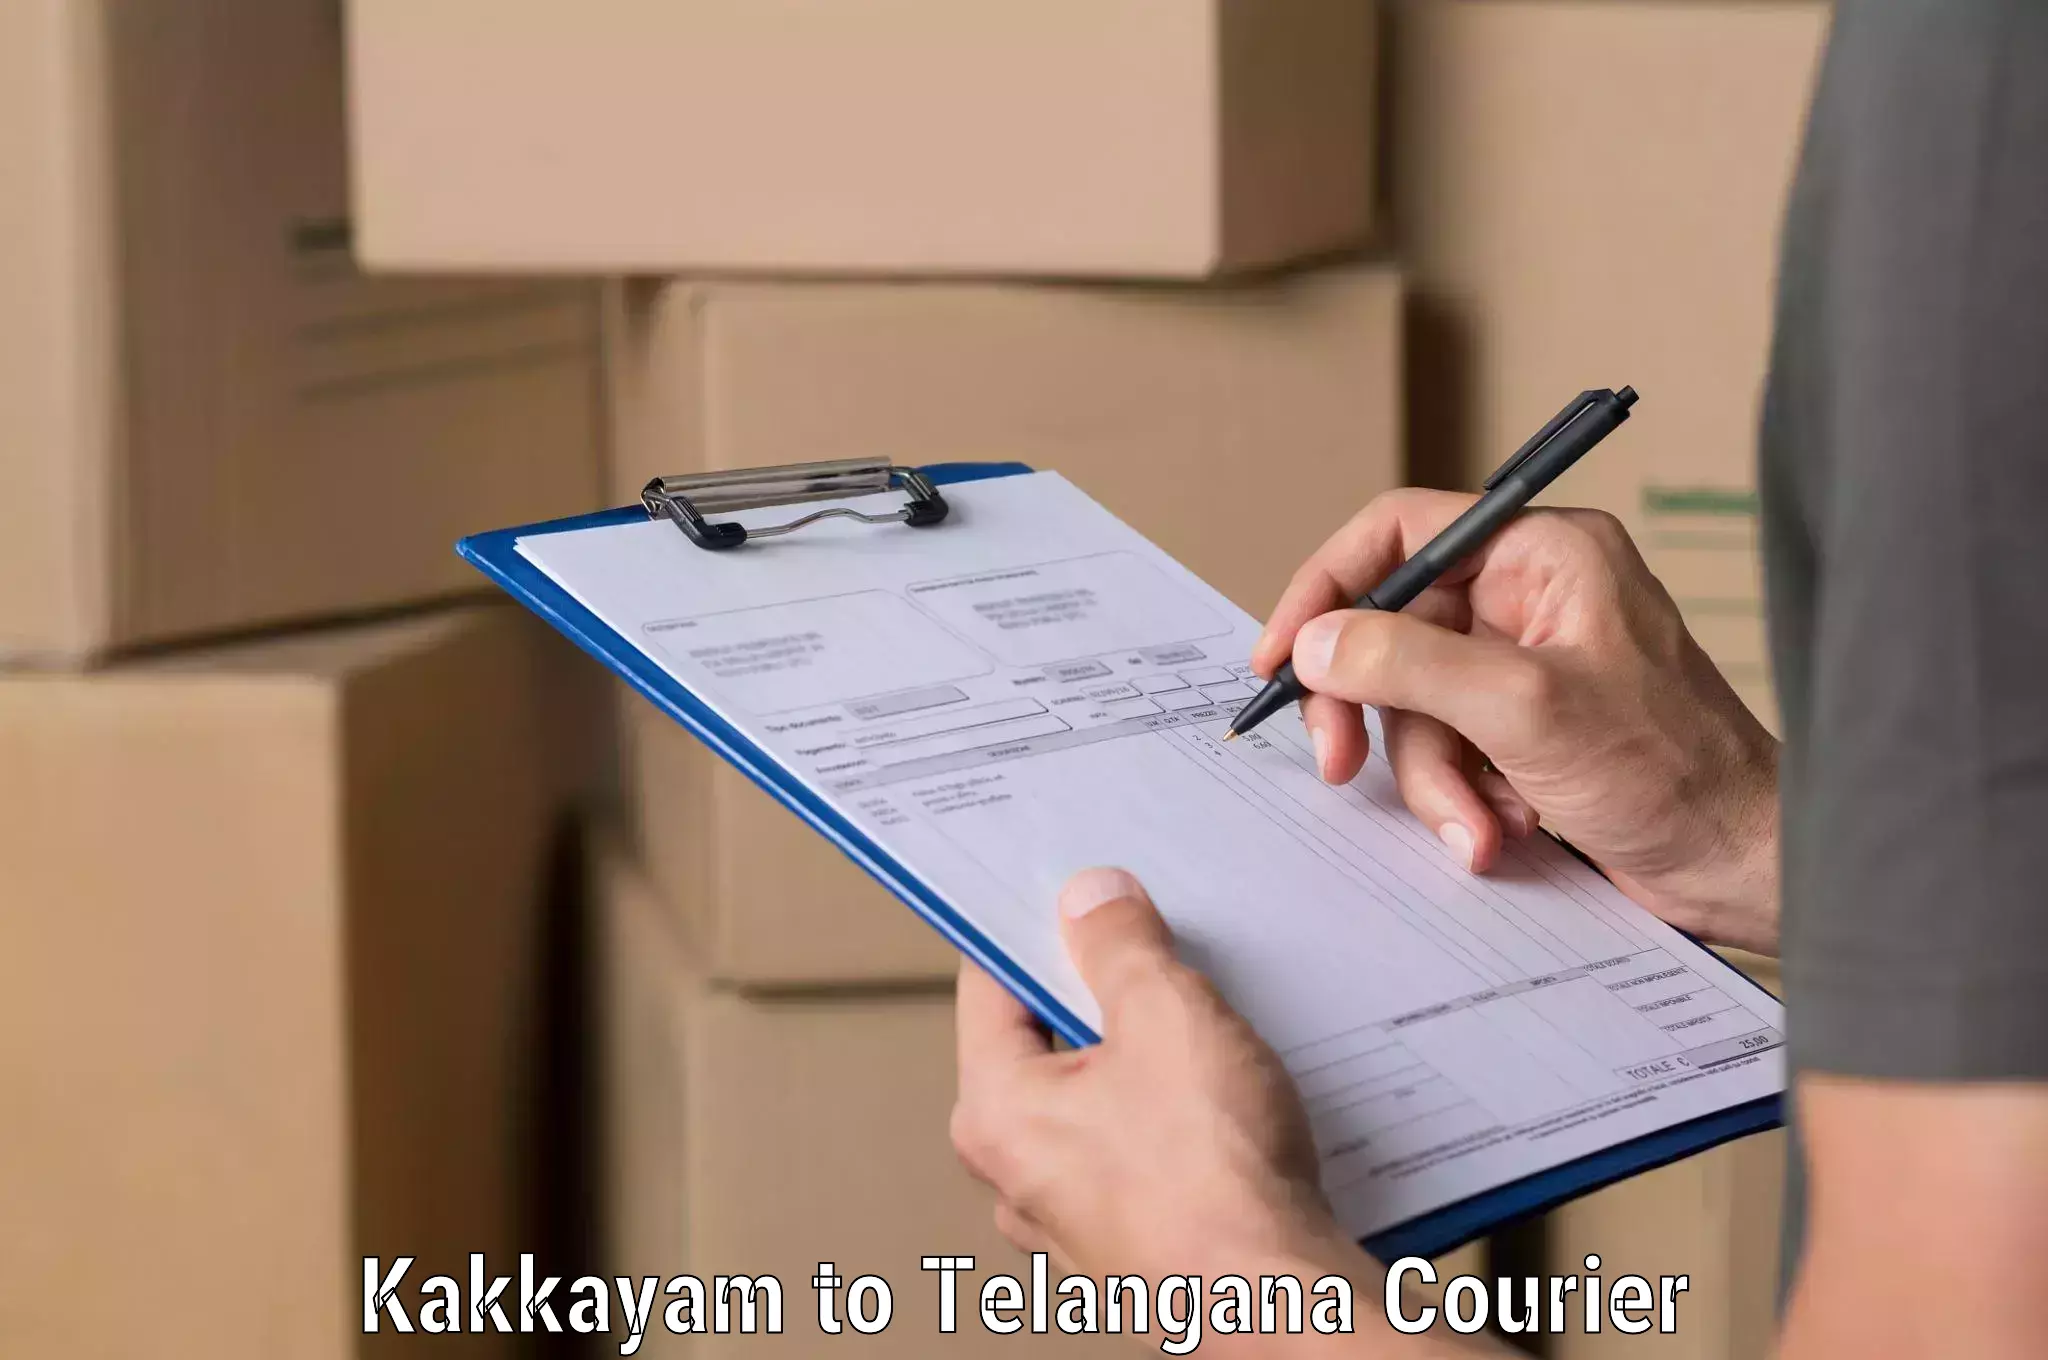 International parcel service Kakkayam to Kacheguda